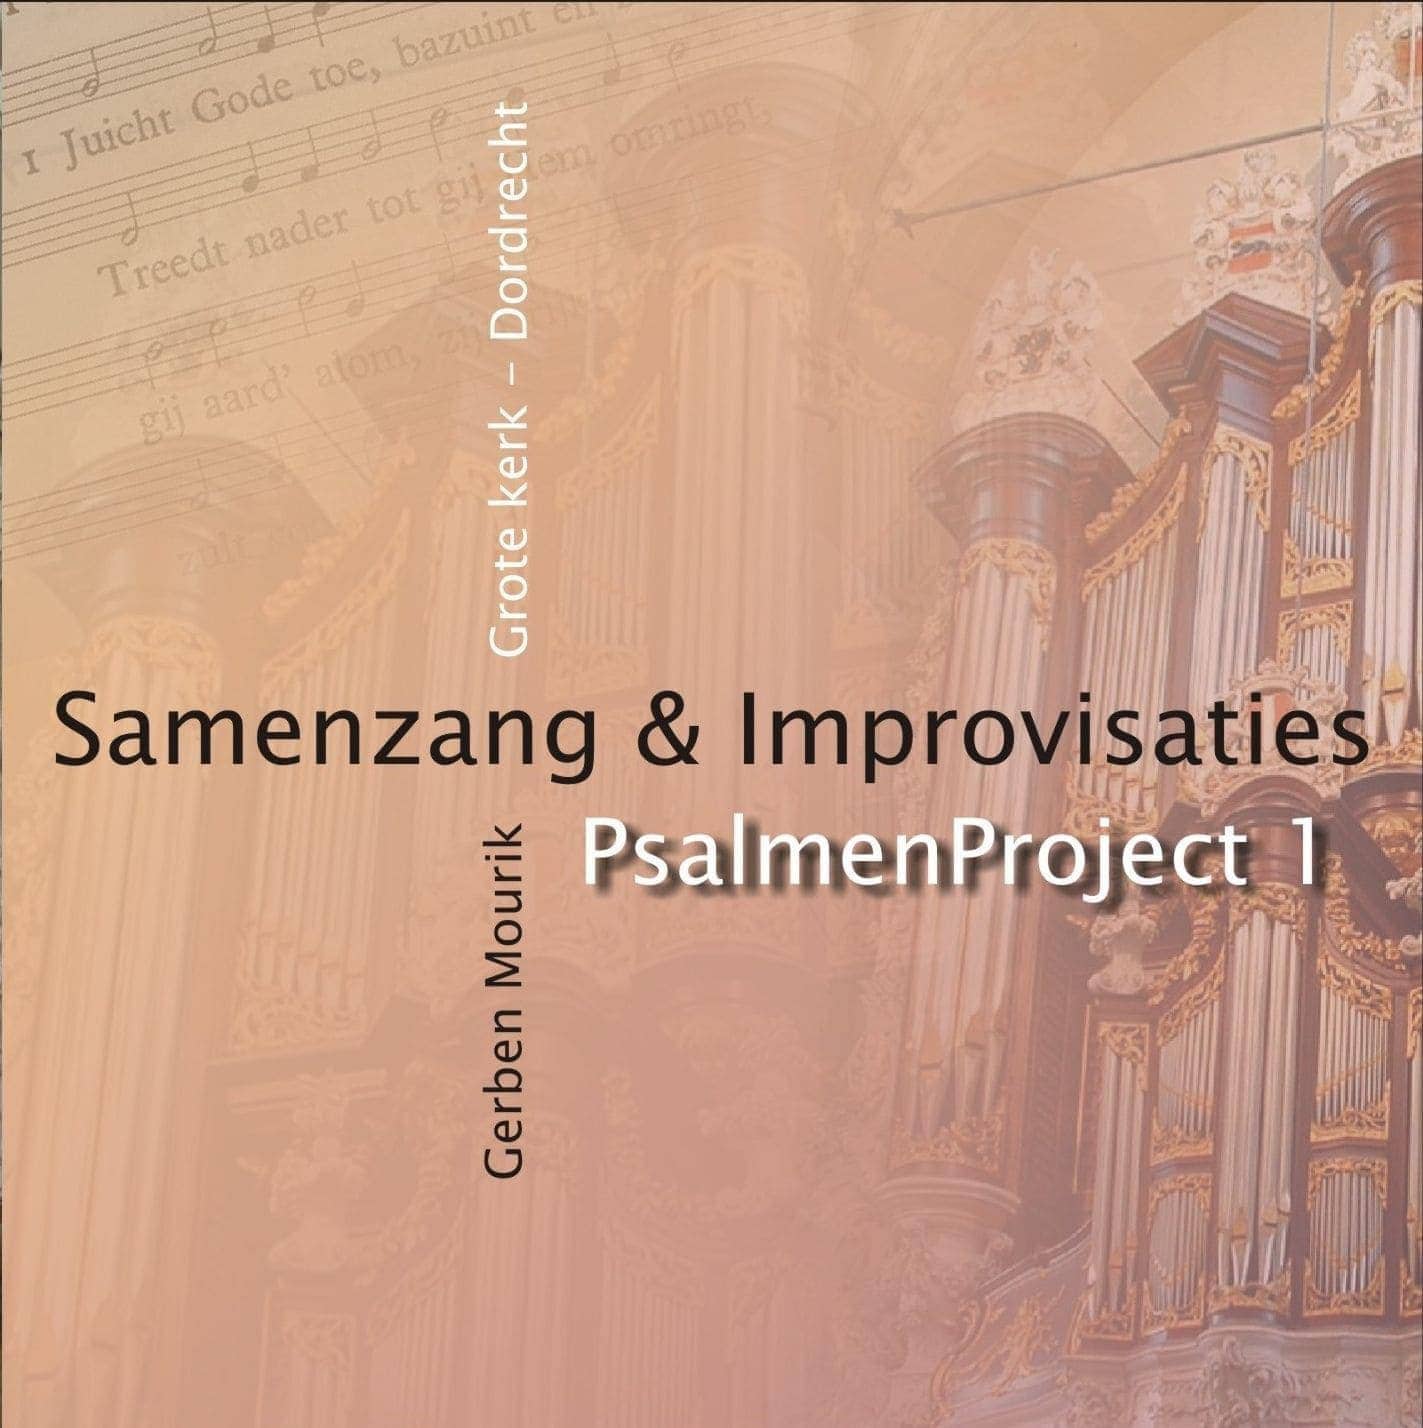 PsalmenProject Vol. 1